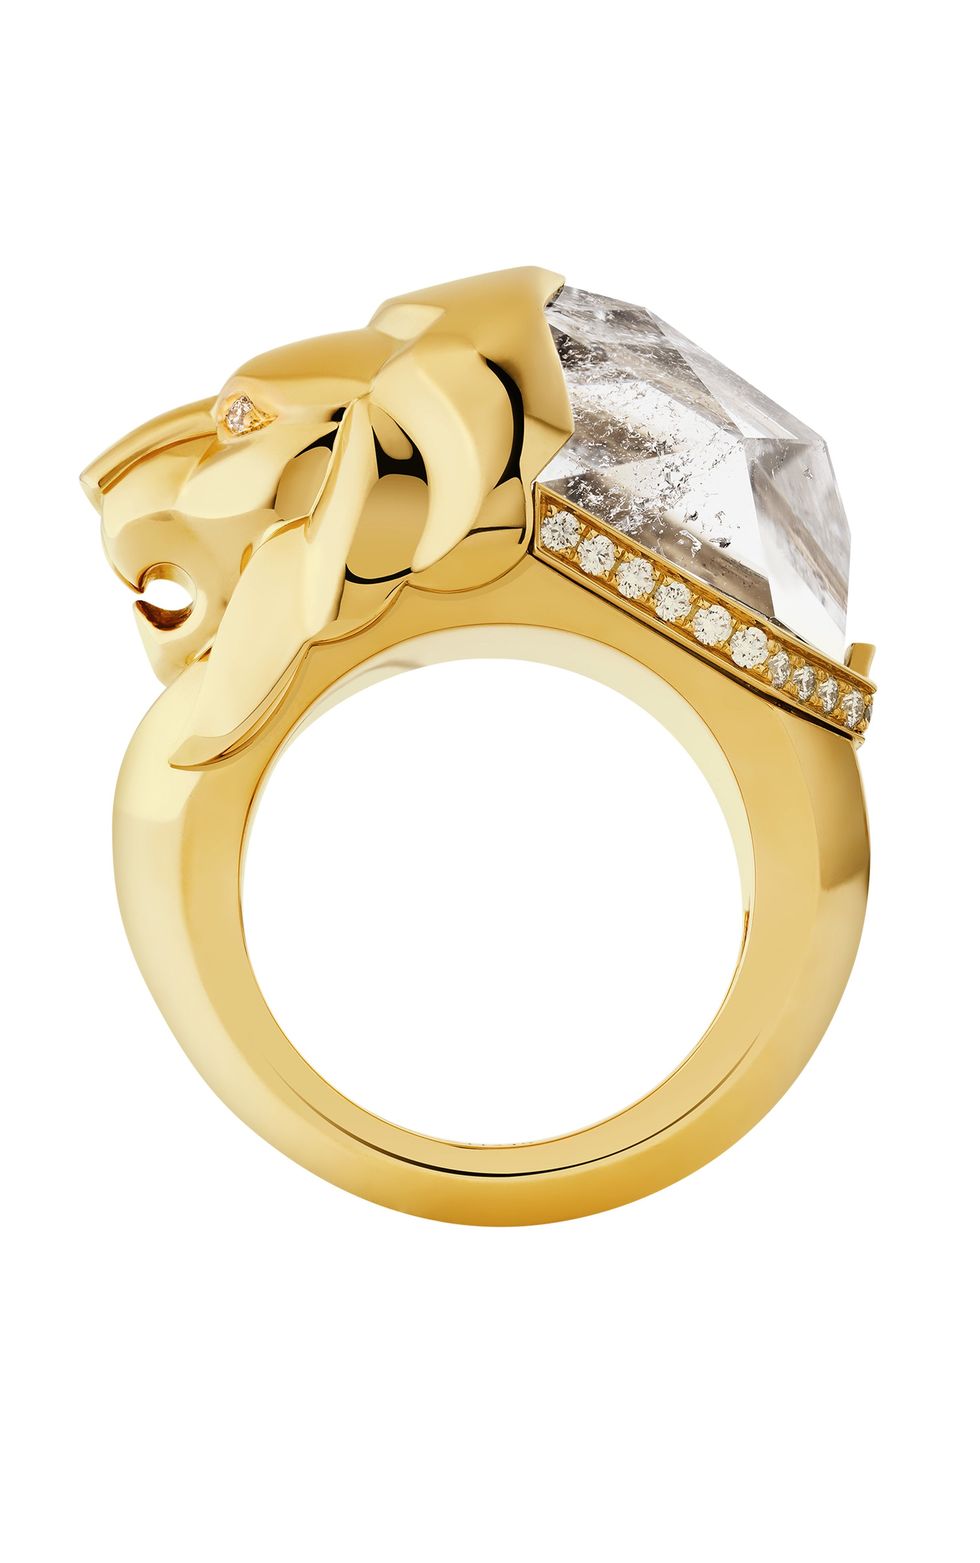 Ring, Engagement ring, Jewellery, Fashion accessory, Diamond, Yellow, Gemstone, Wedding ring, Wedding ceremony supply, Pre-engagement ring, 